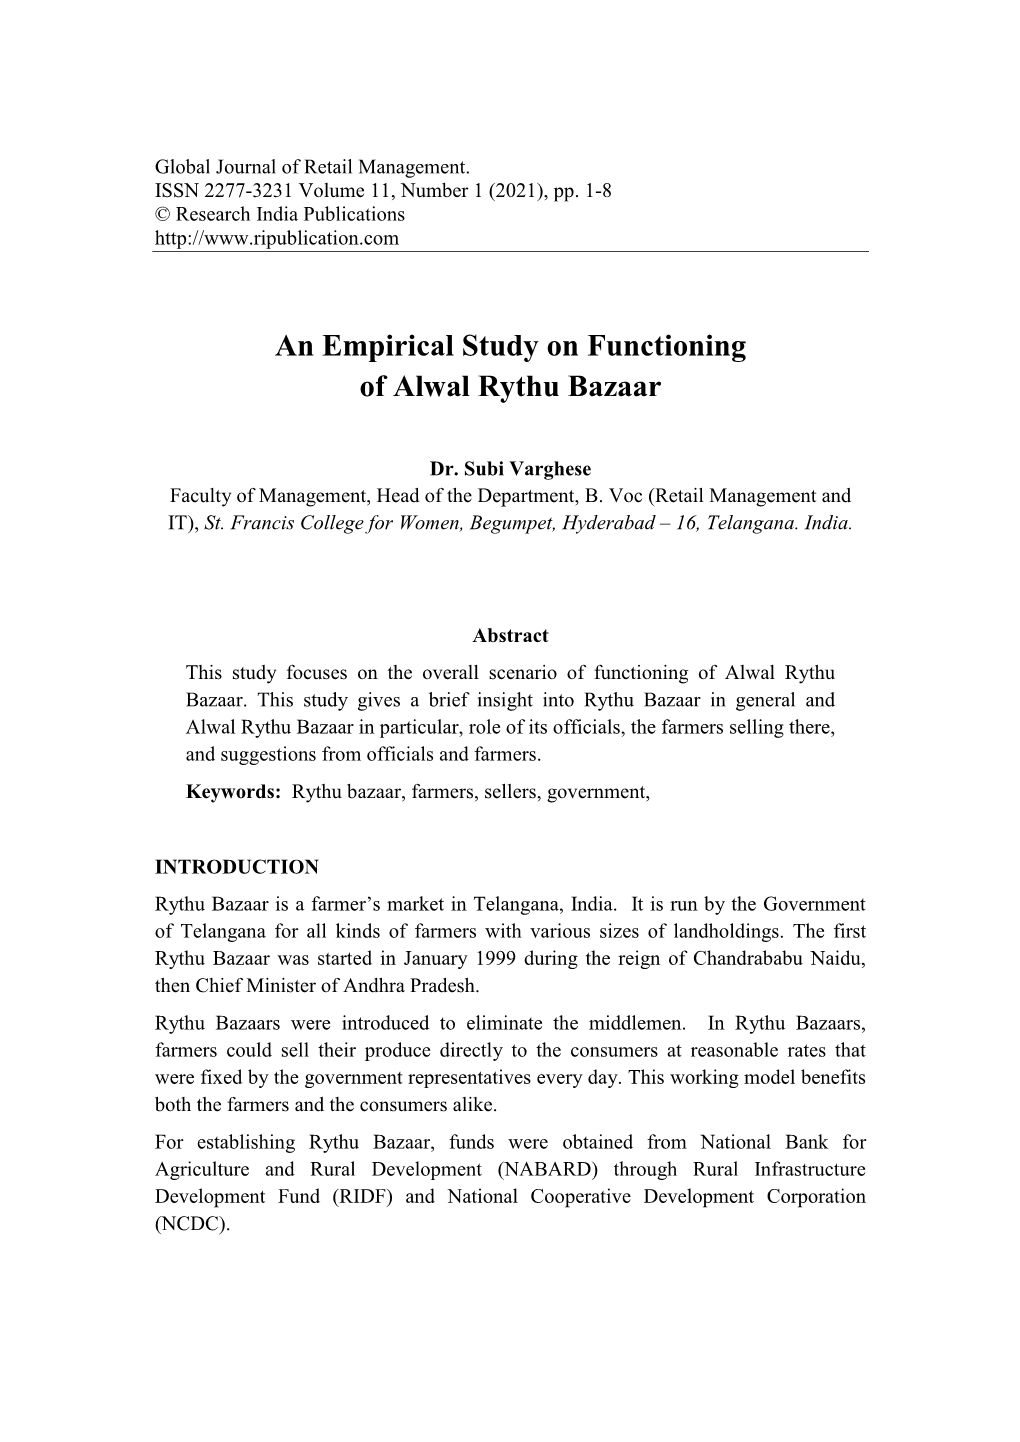 An Empirical Study on Functioning of Alwal Rythu Bazaar